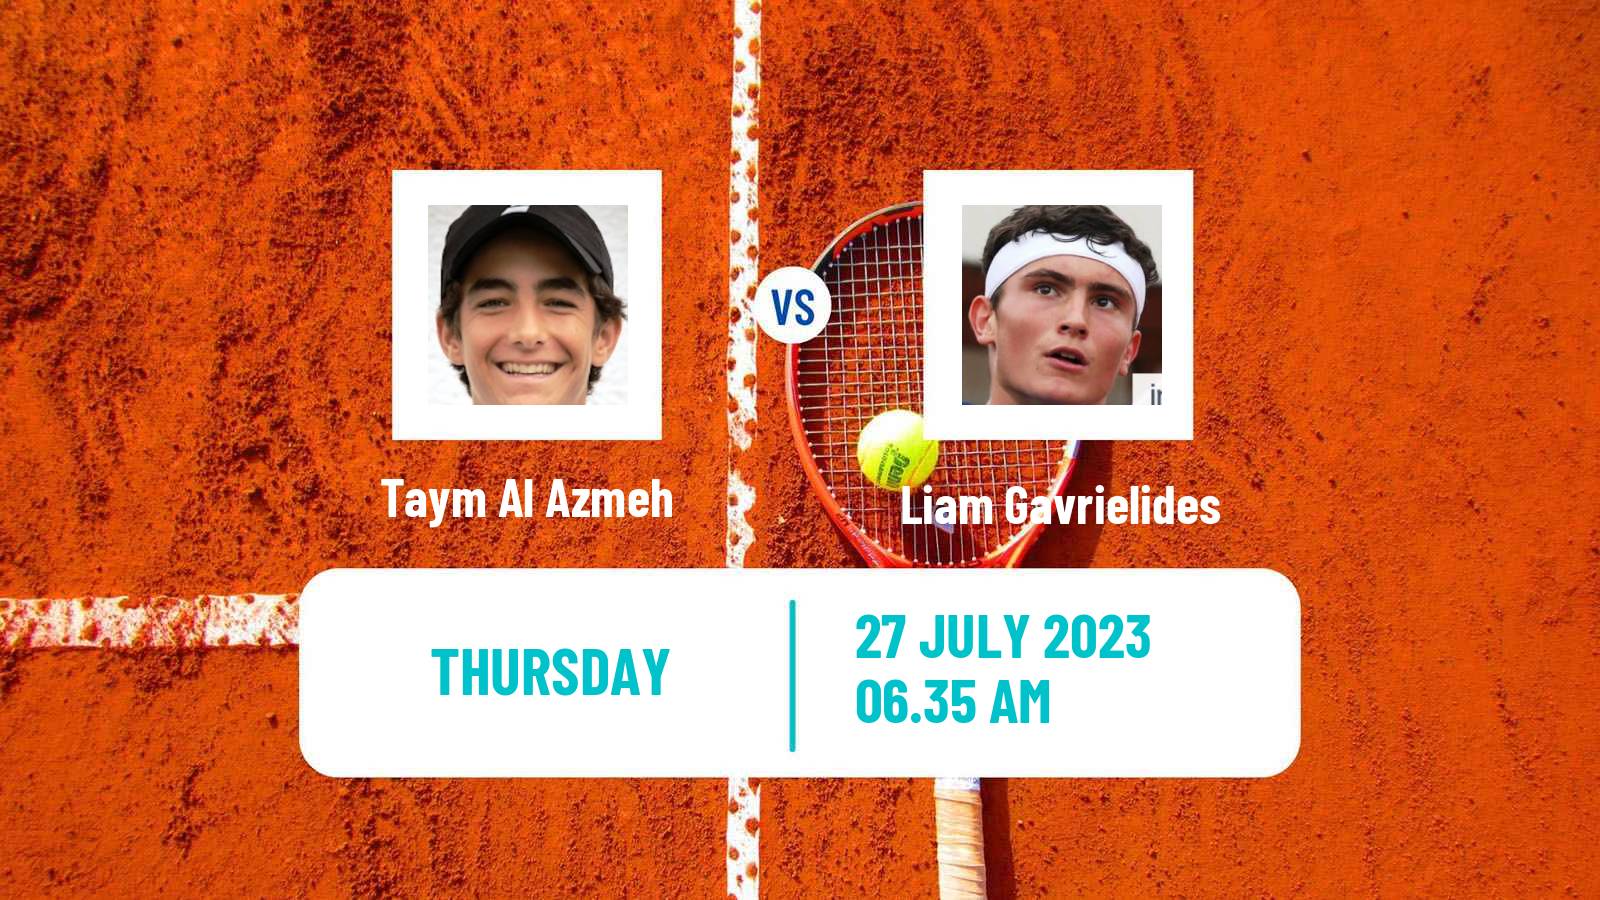 Tennis ITF M15 Metzingen Men Taym Al Azmeh - Liam Gavrielides